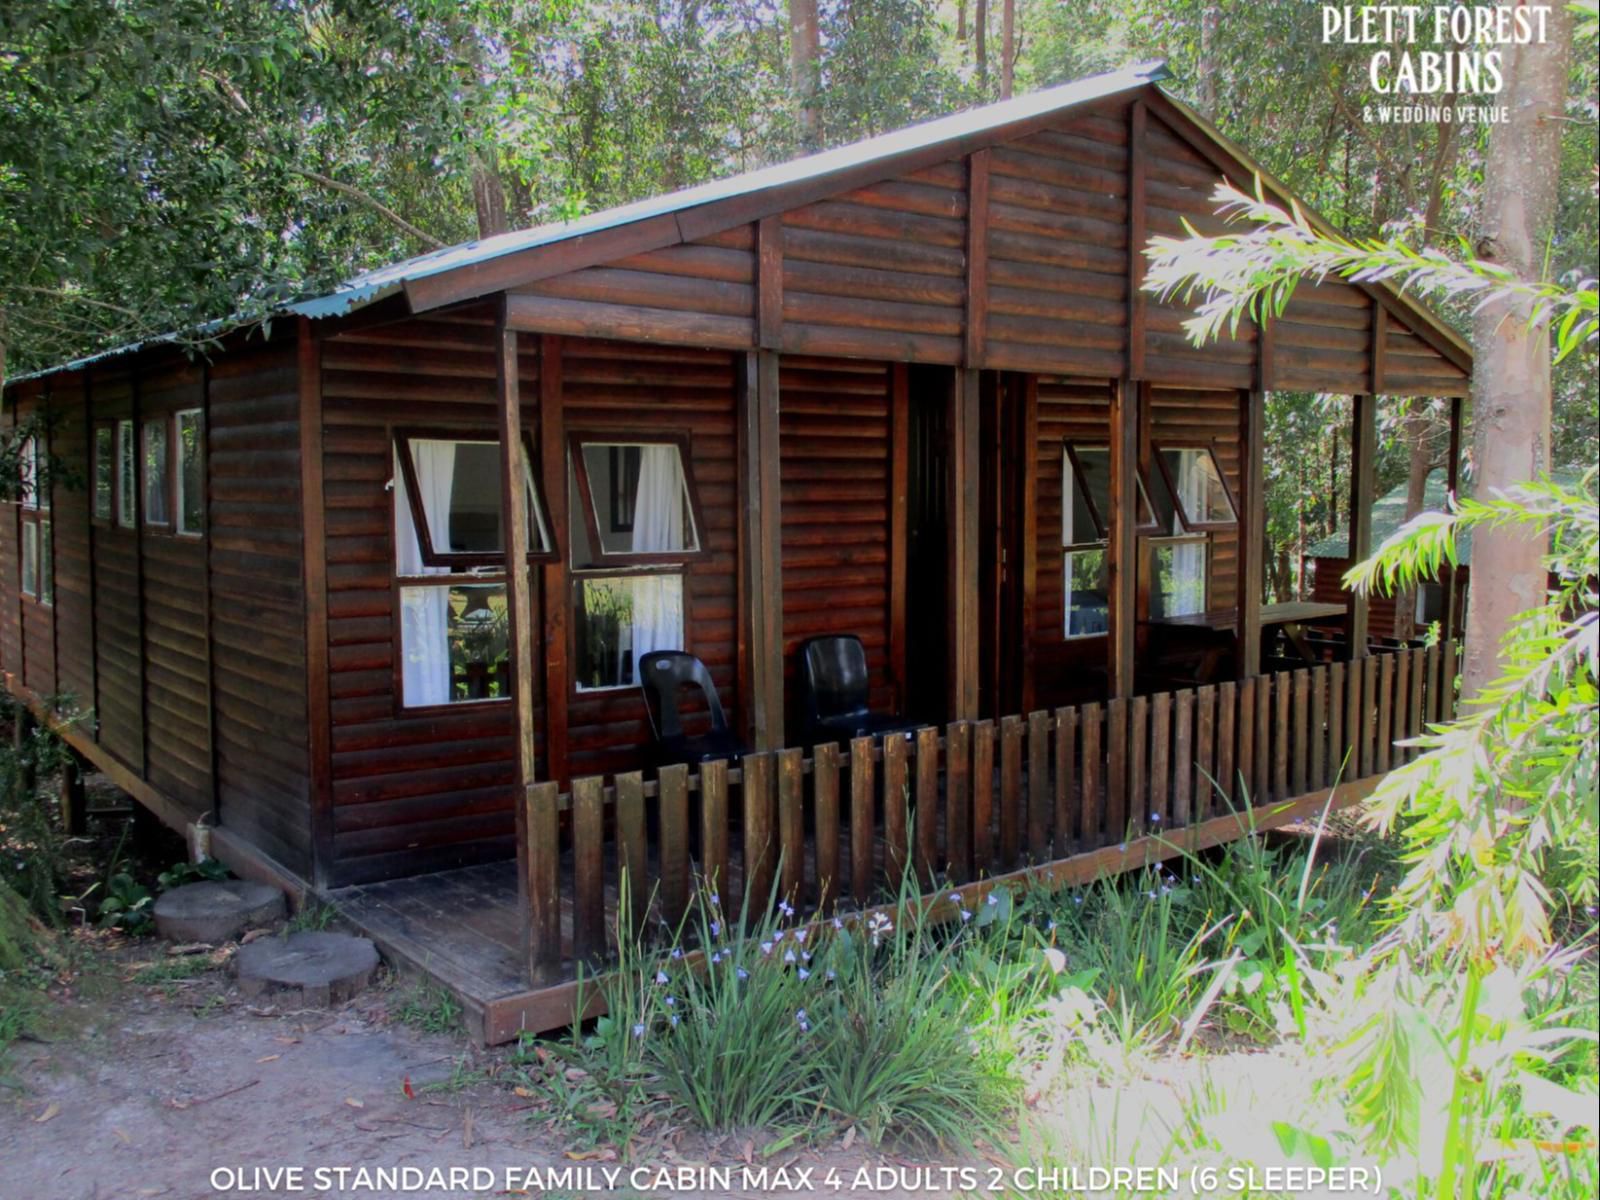 Plett Forest Cabins Harkerville Plettenberg Bay Western Cape South Africa Cabin, Building, Architecture